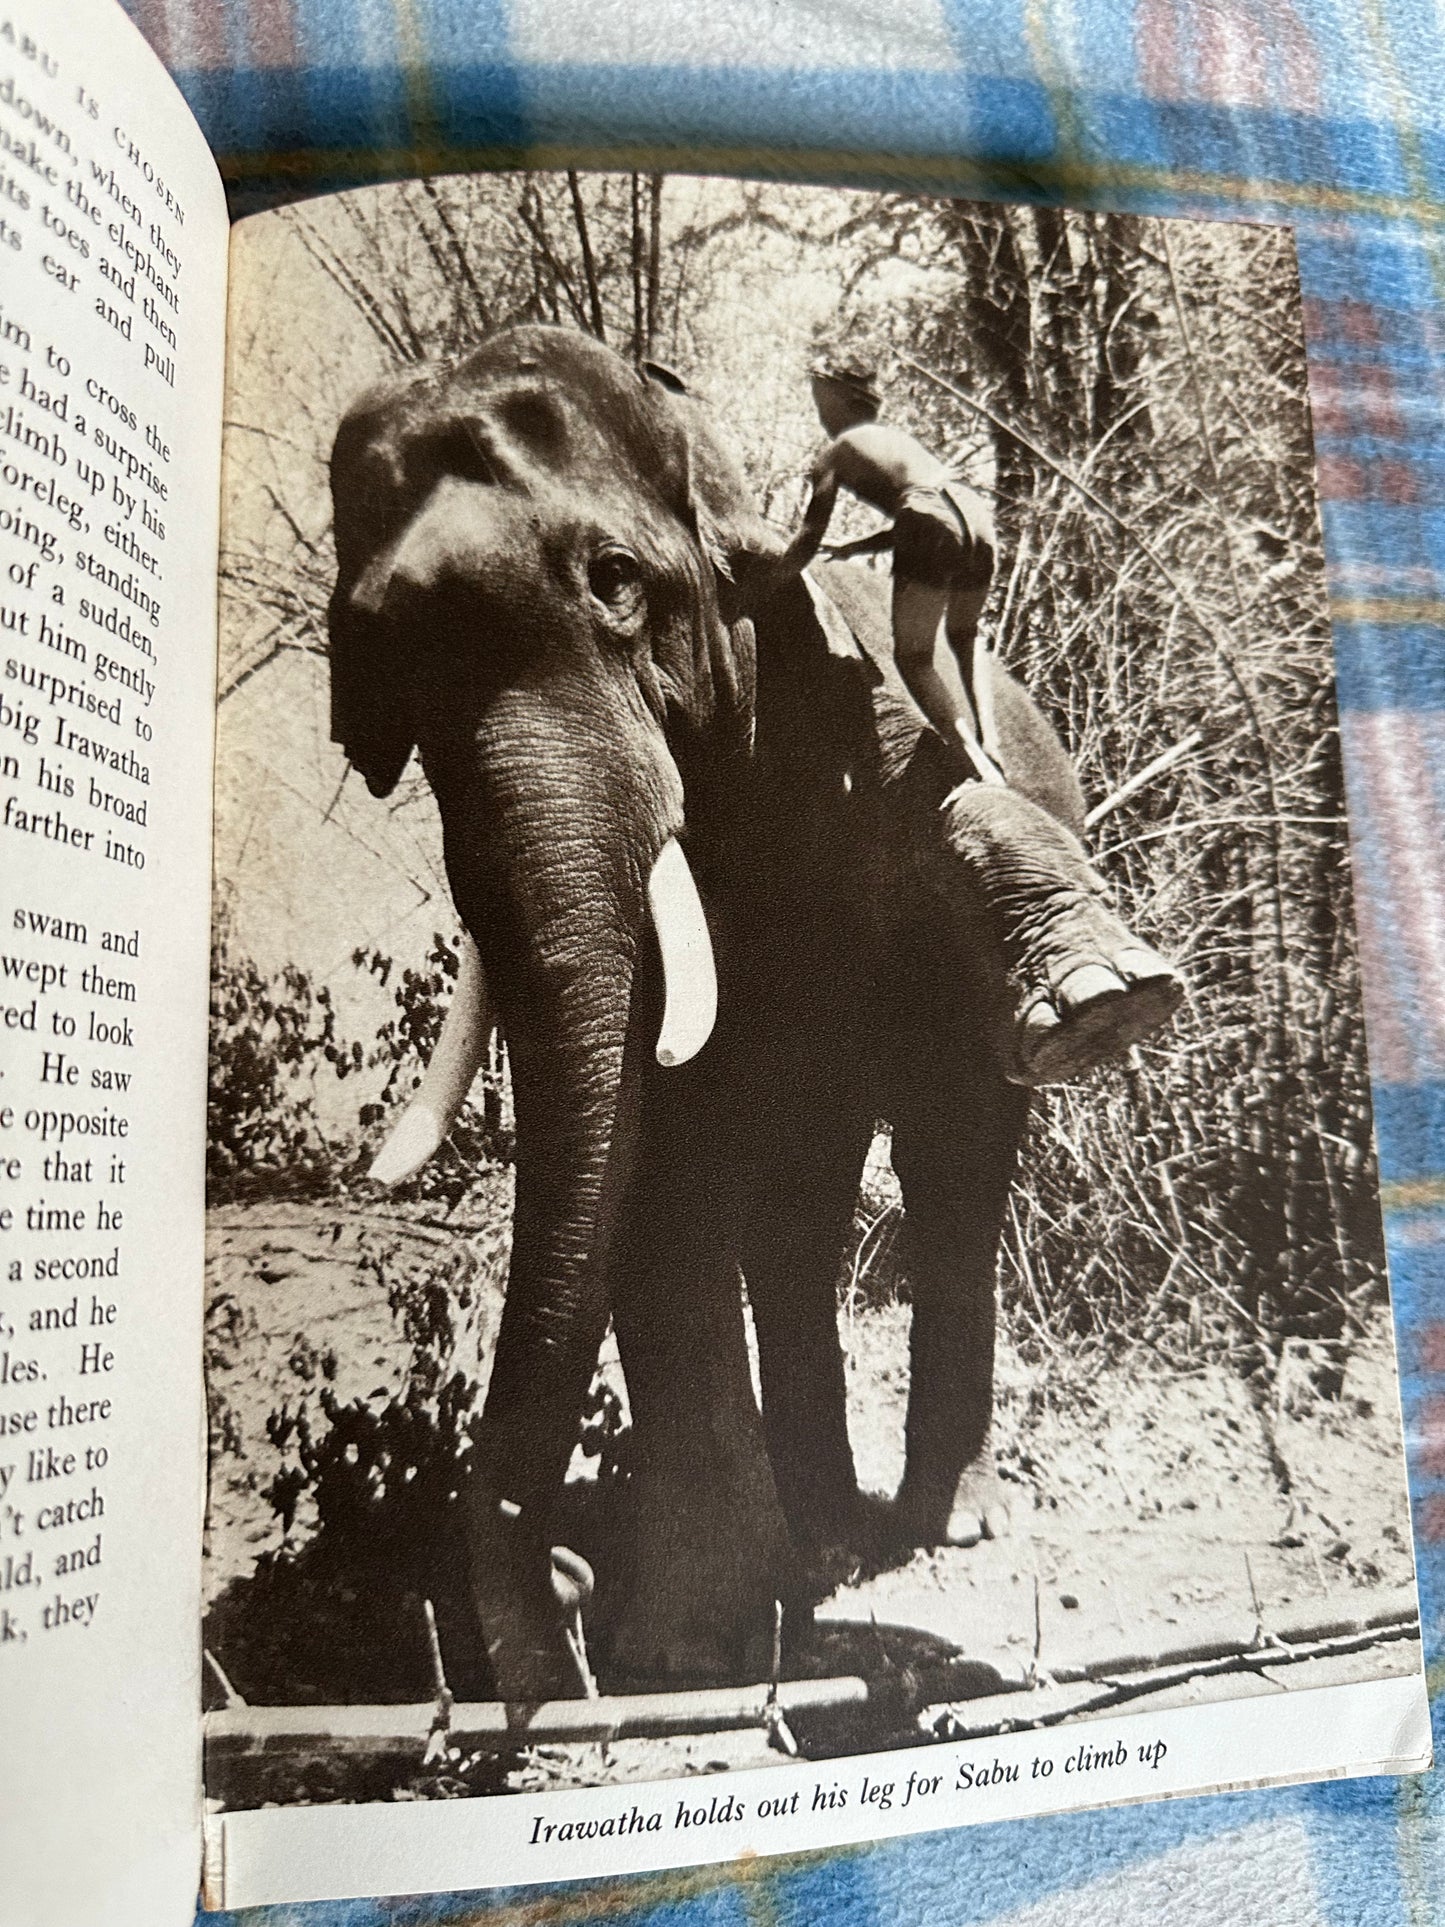 1937*1st* Sabu The Elephant Boy - Frances Flaherty/Ursula Leacock (Dent)